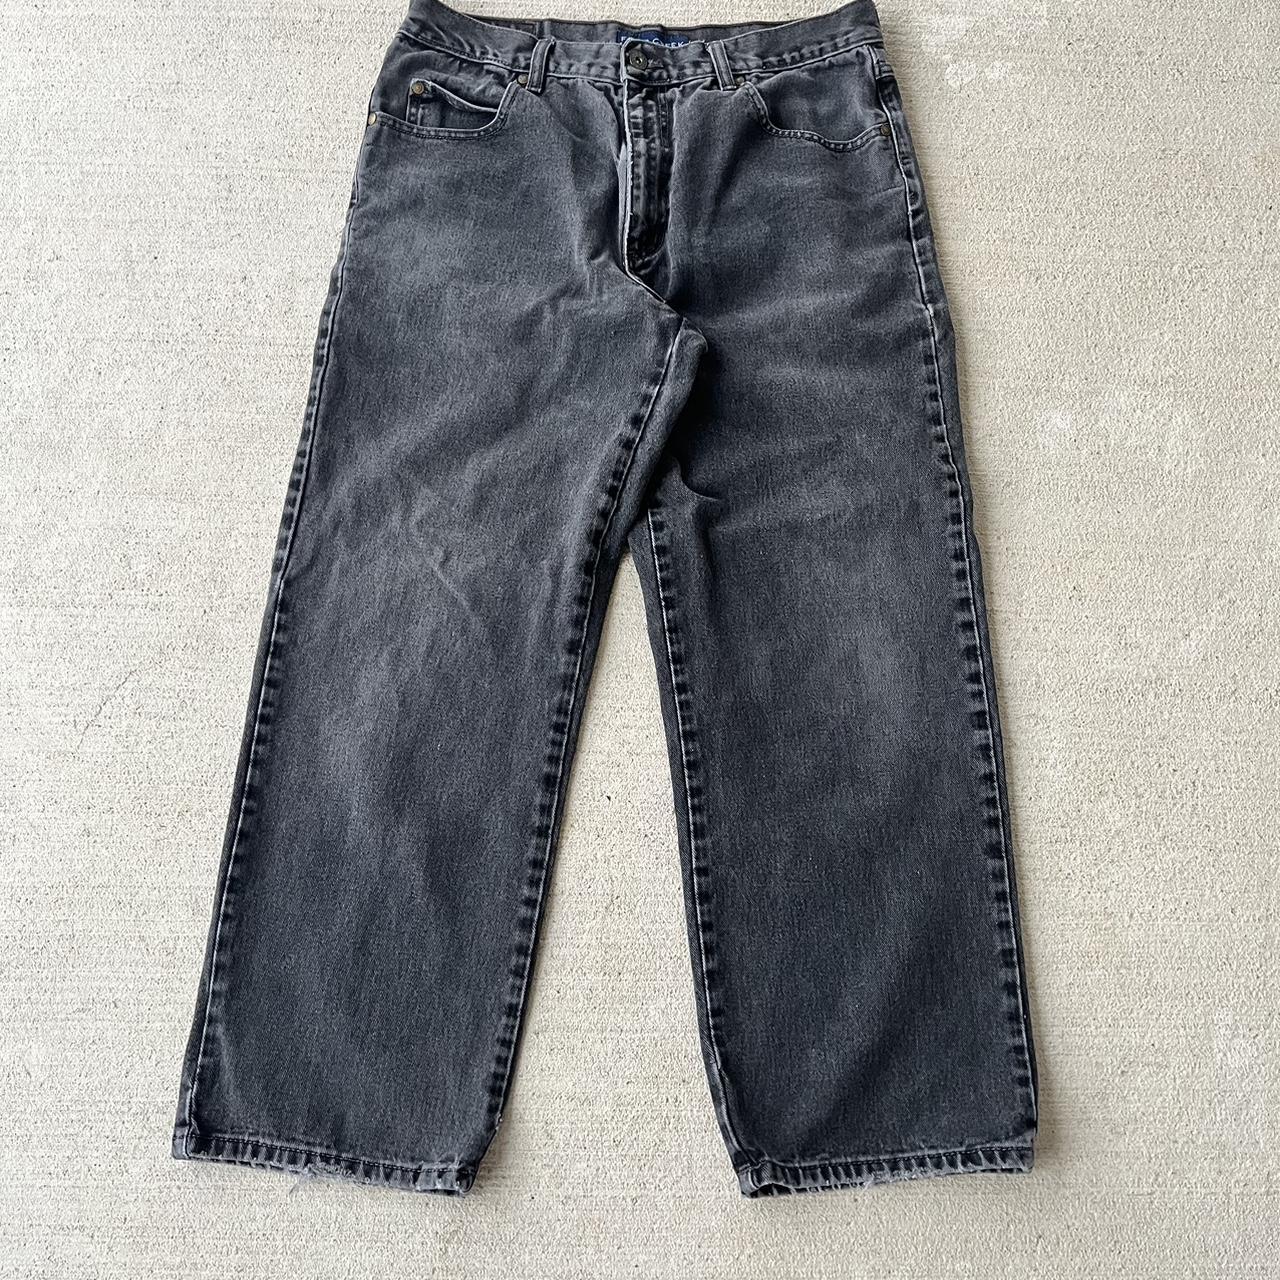 Falls Creek Jeans Size:34x30 but are a little... - Depop